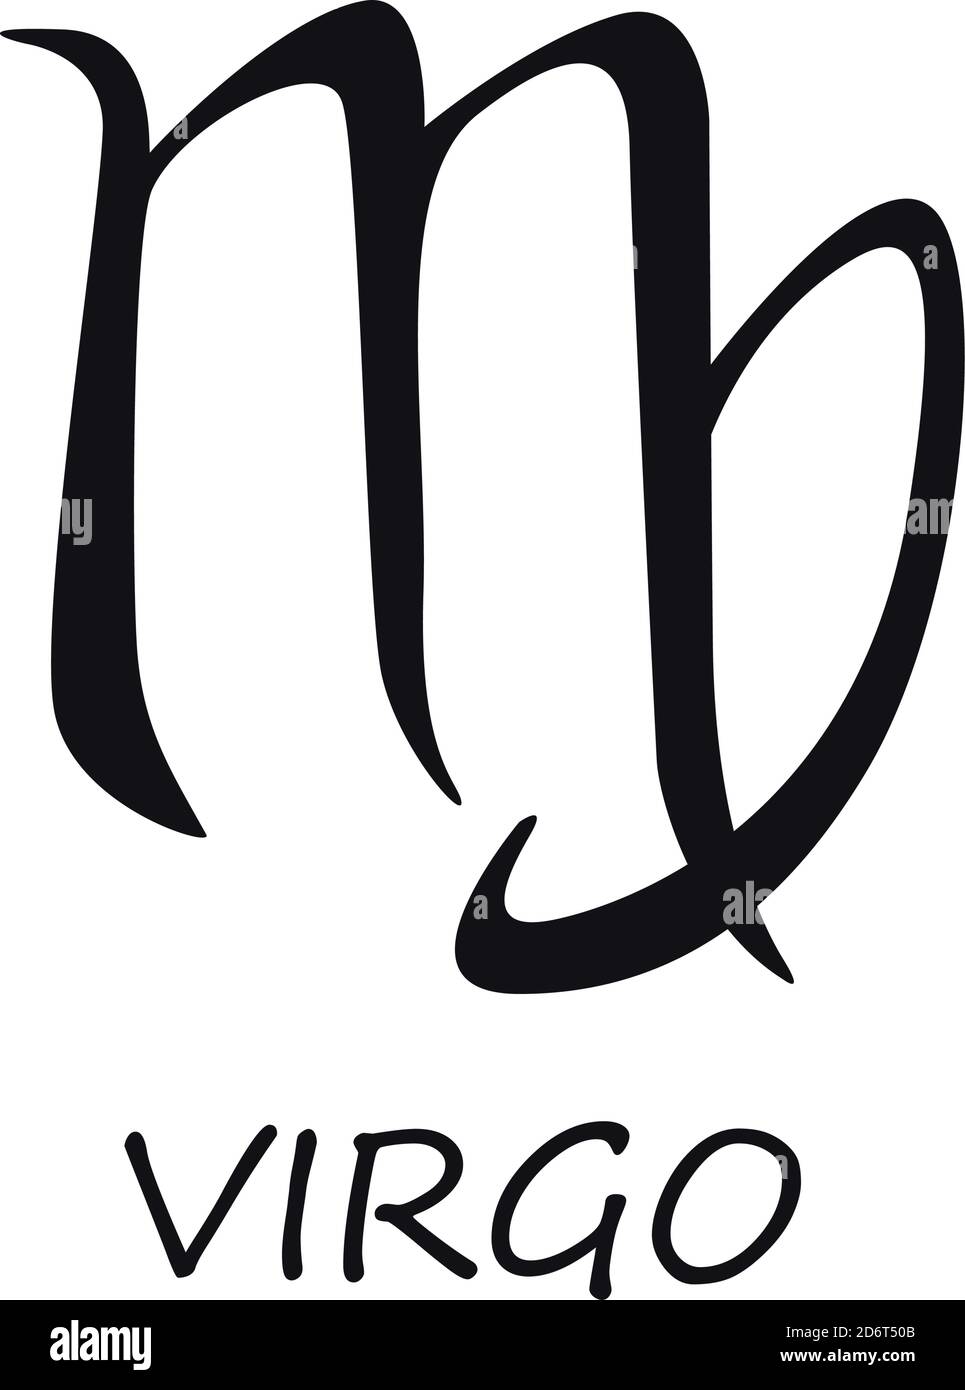 Virgo zodiac sign black vector illustration Stock Vector Image & Art ...